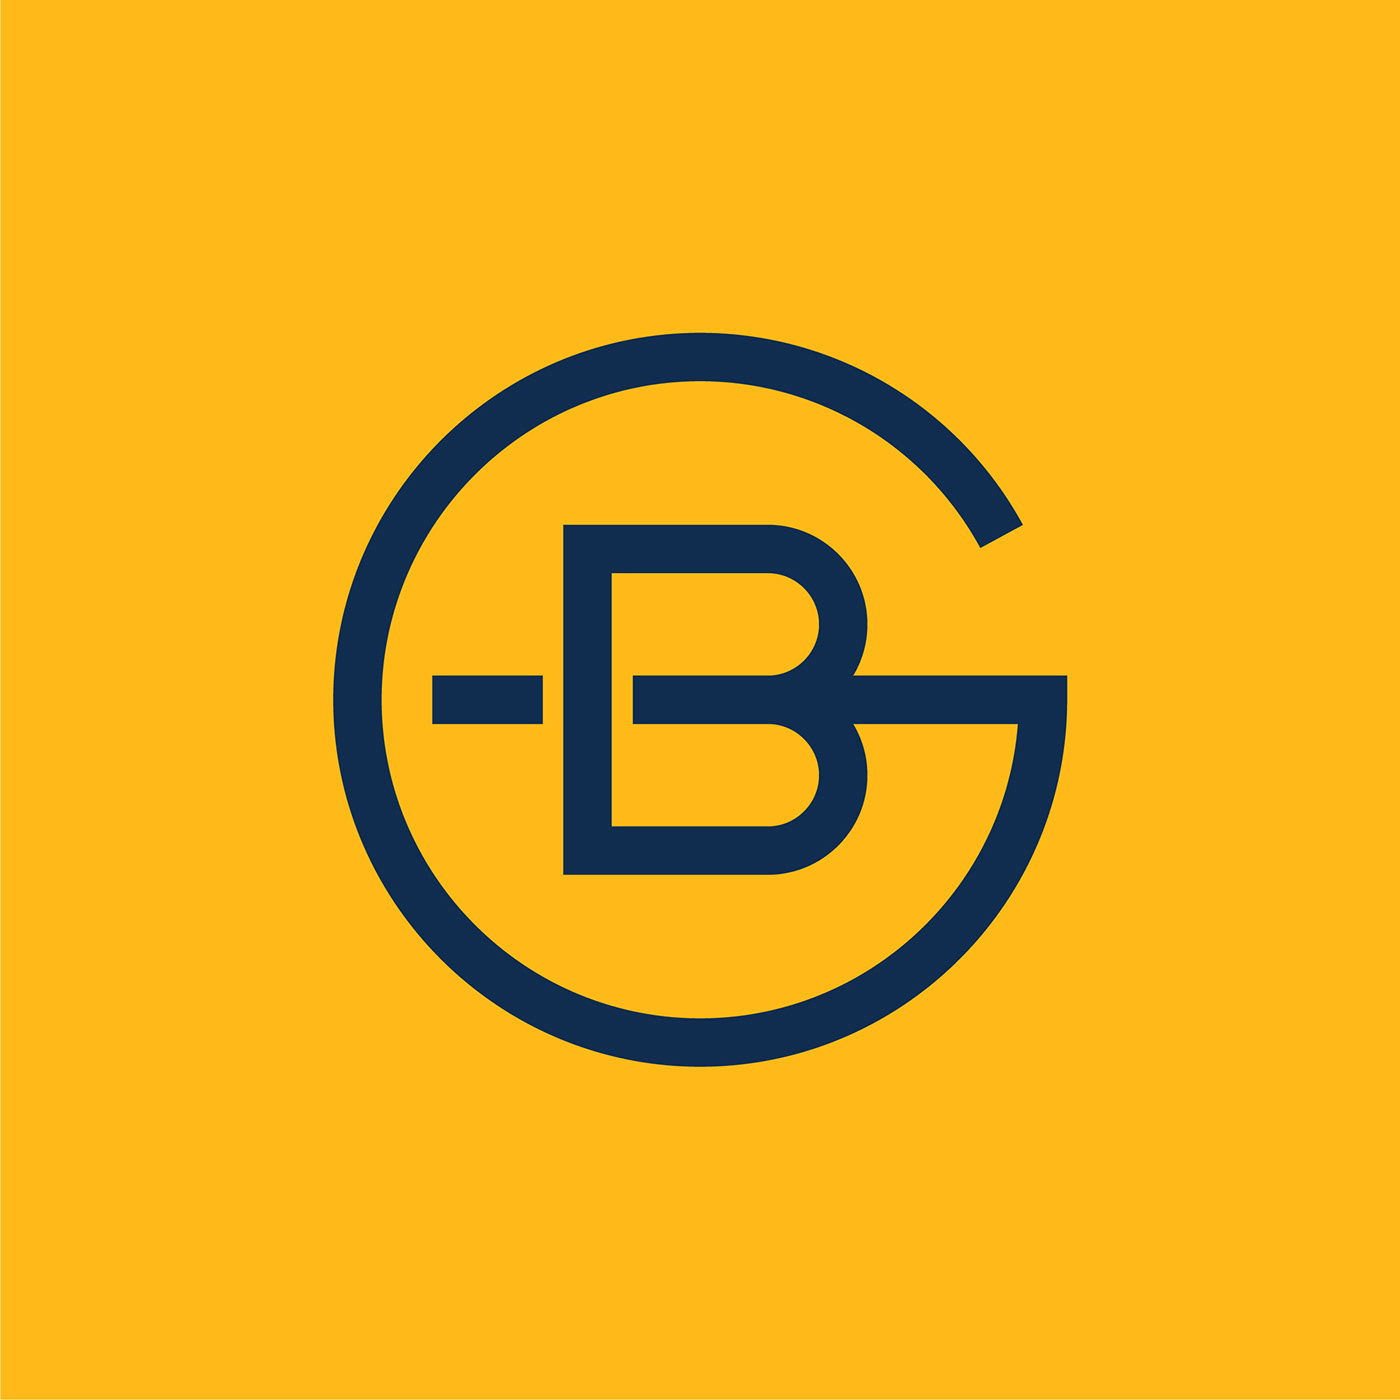 bear brand branding  construction Equities equity house logo Logo Design monogram